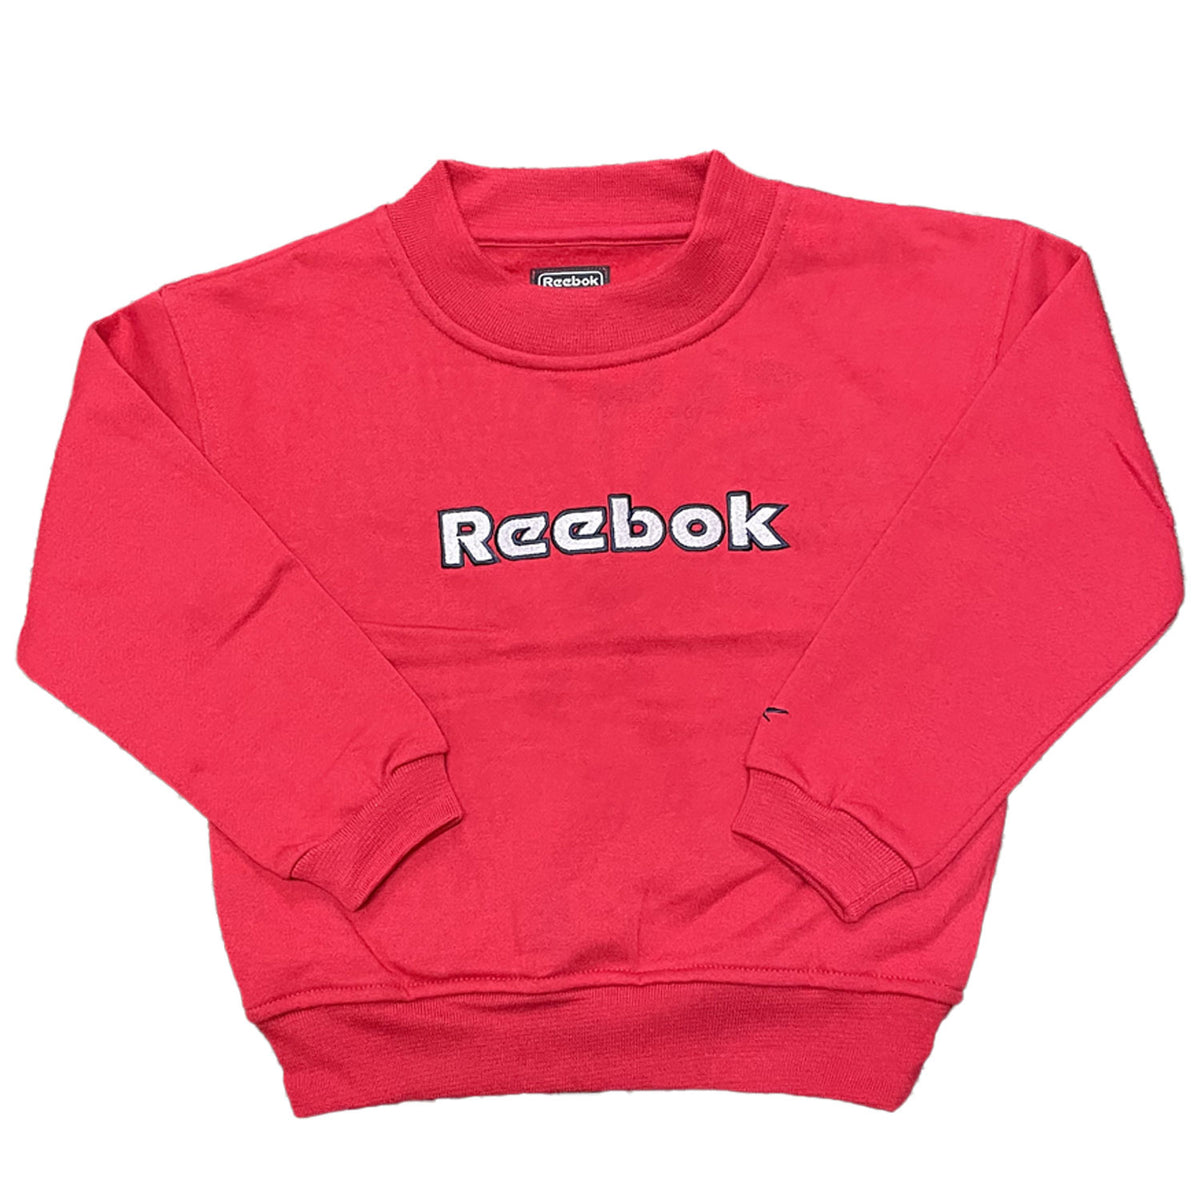 Reebok Infant Sports Academy Sweatshirt 3